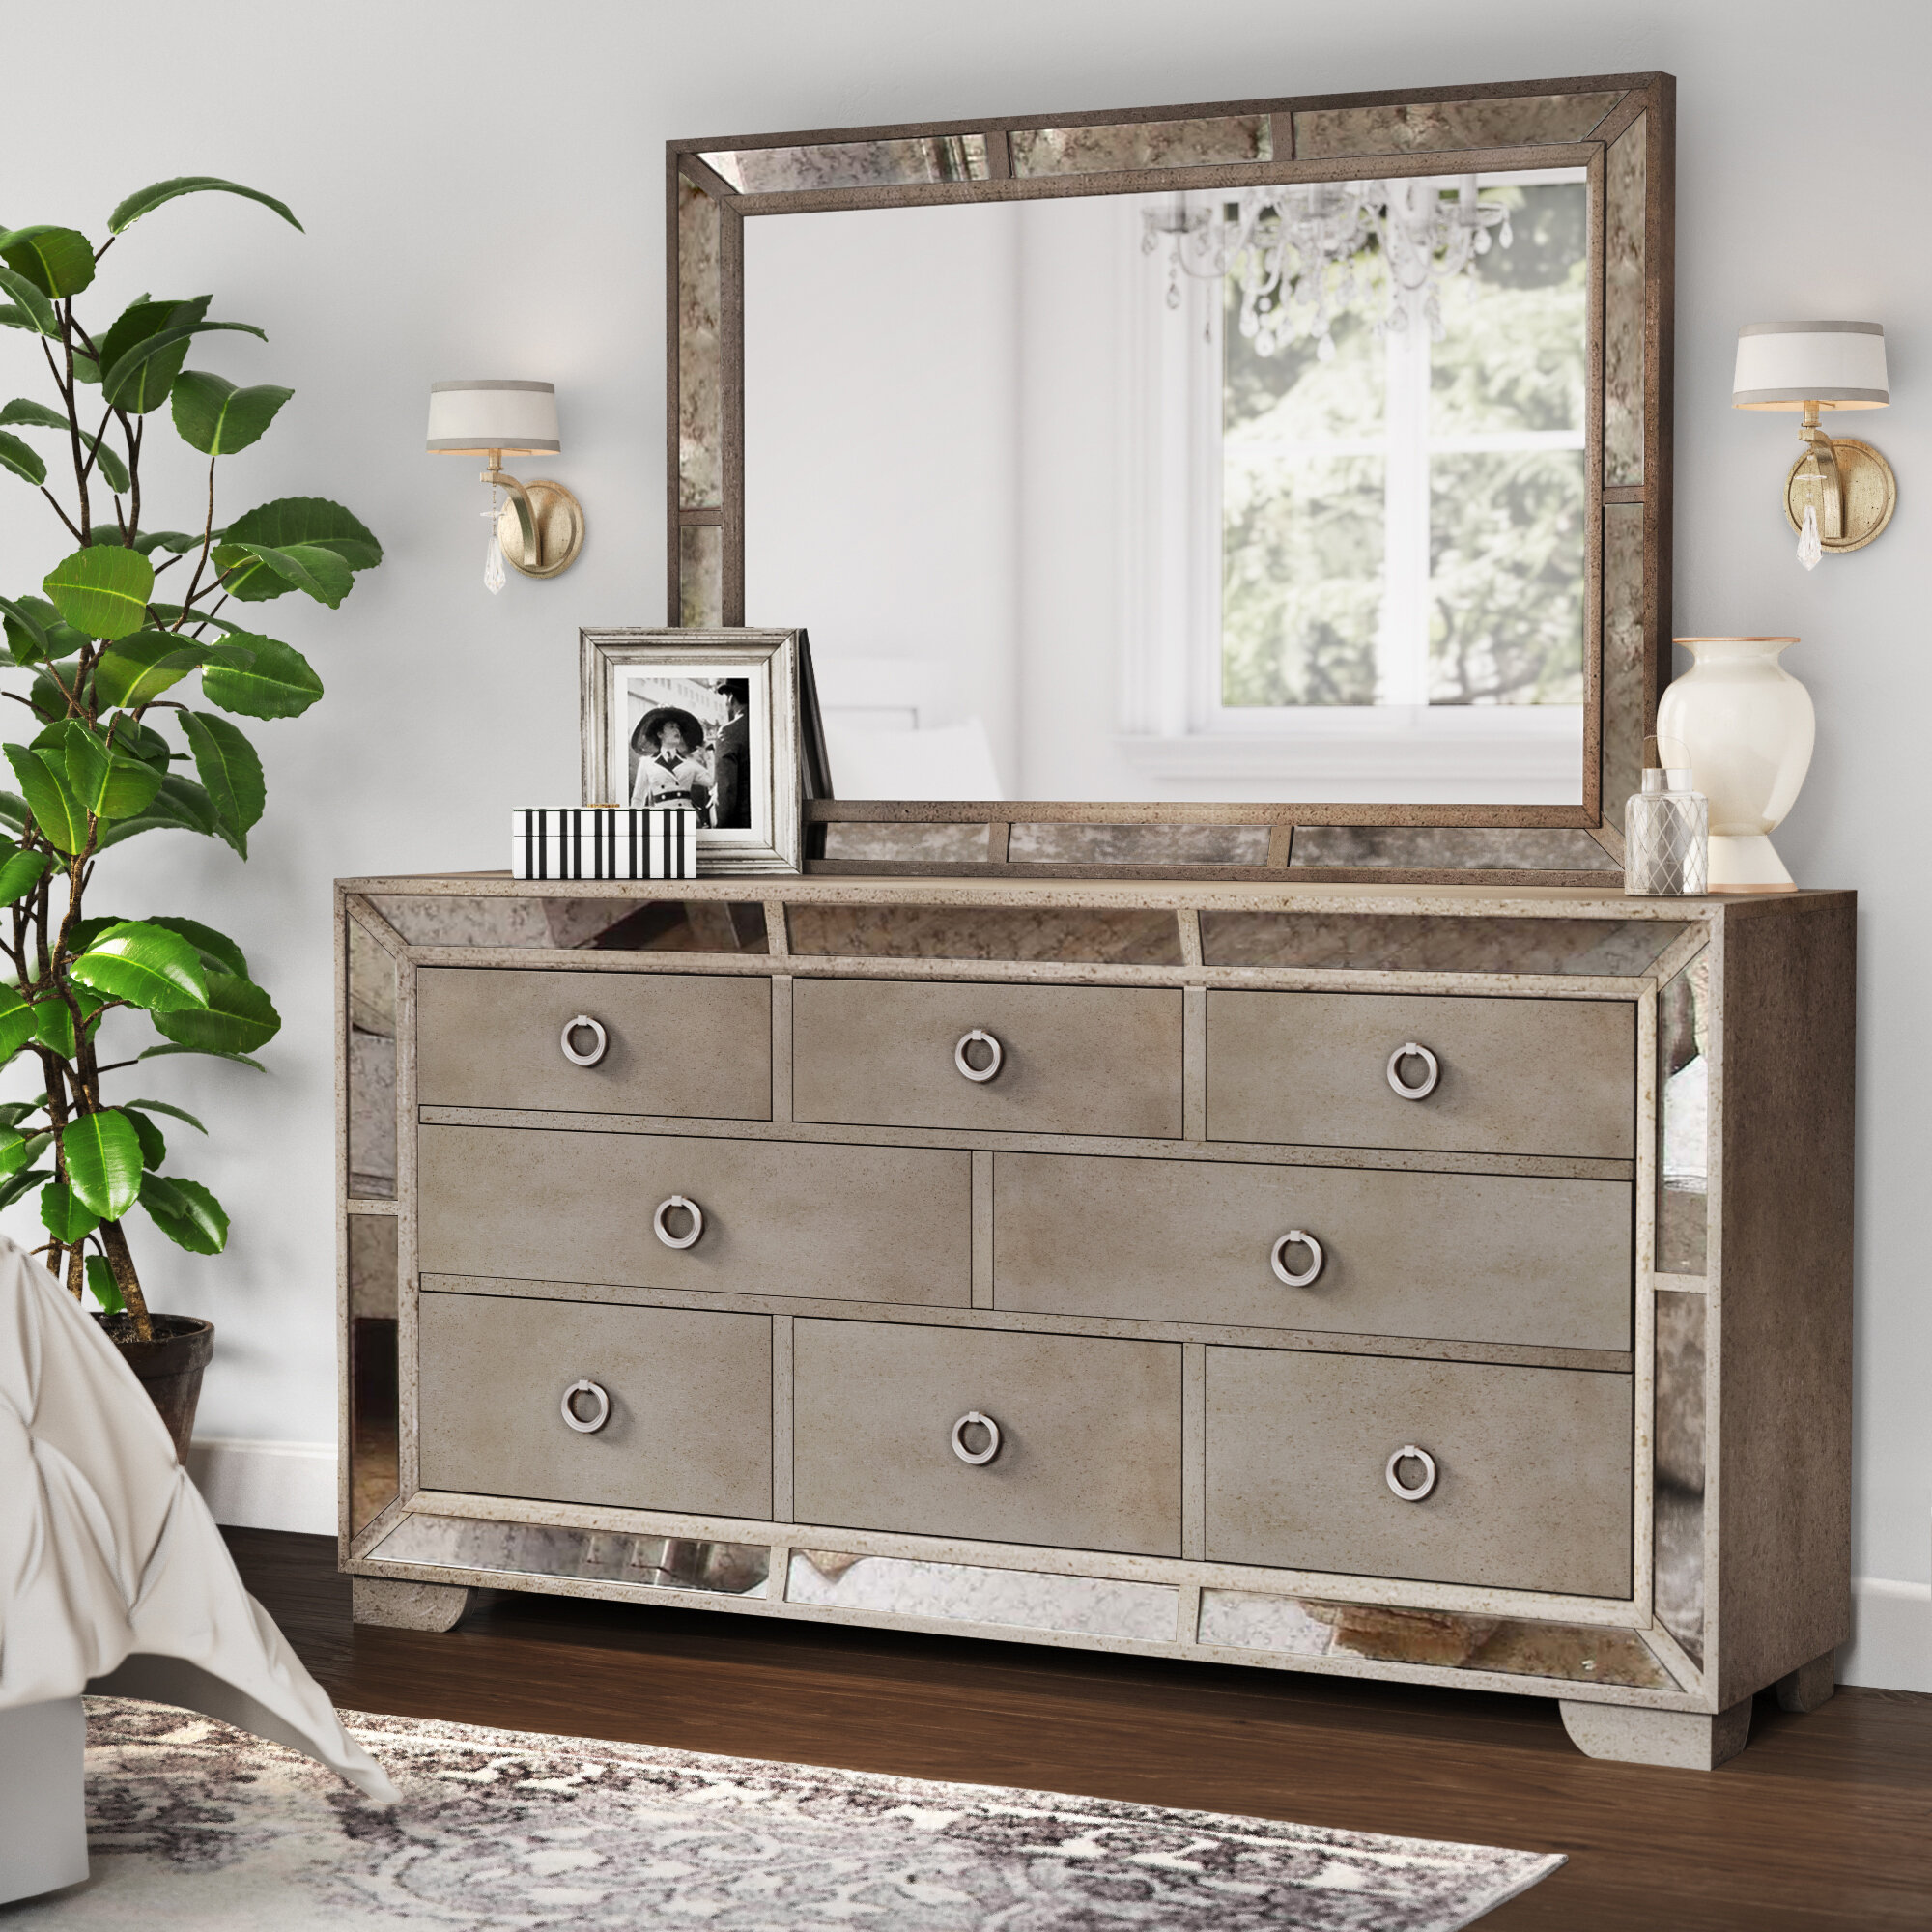 Willa Arlo Interiors Dowson 8 Drawer Dresser With Mirror Reviews